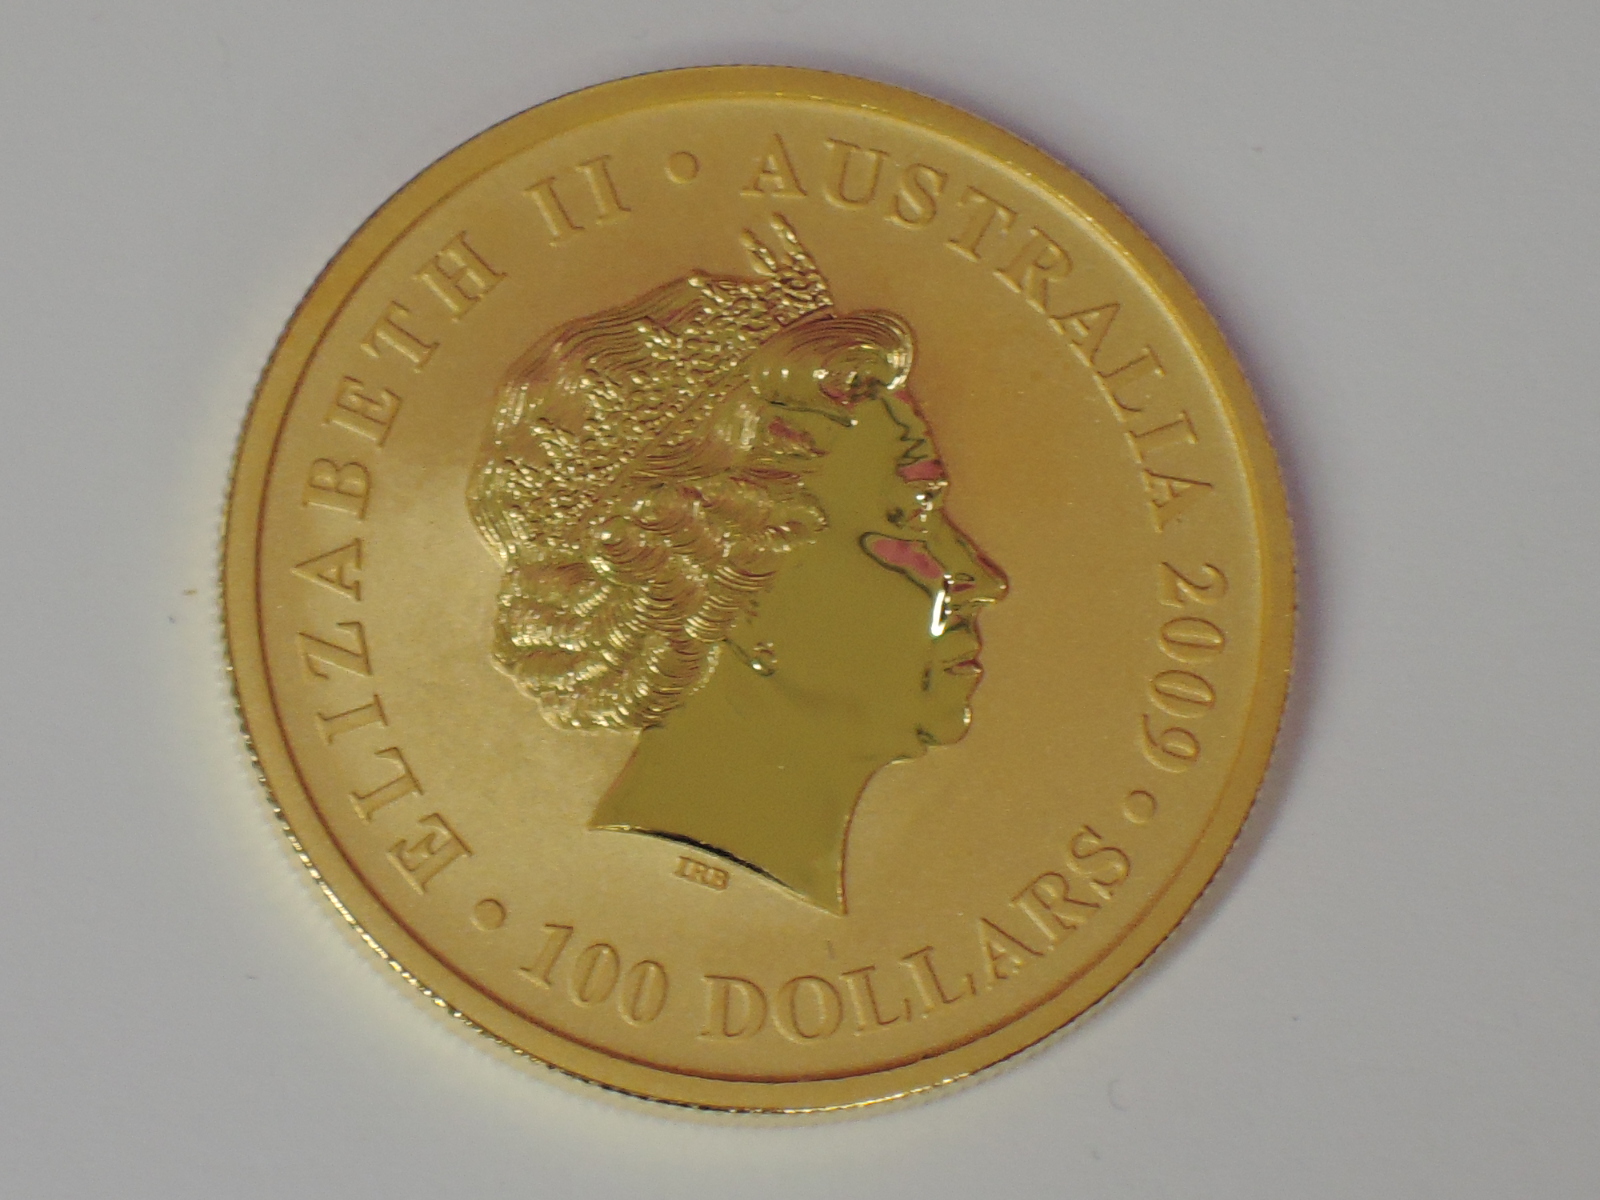 A gold 1oz 2009 100 dollar Australian Kangaroo coin, in plastic case - Image 2 of 2